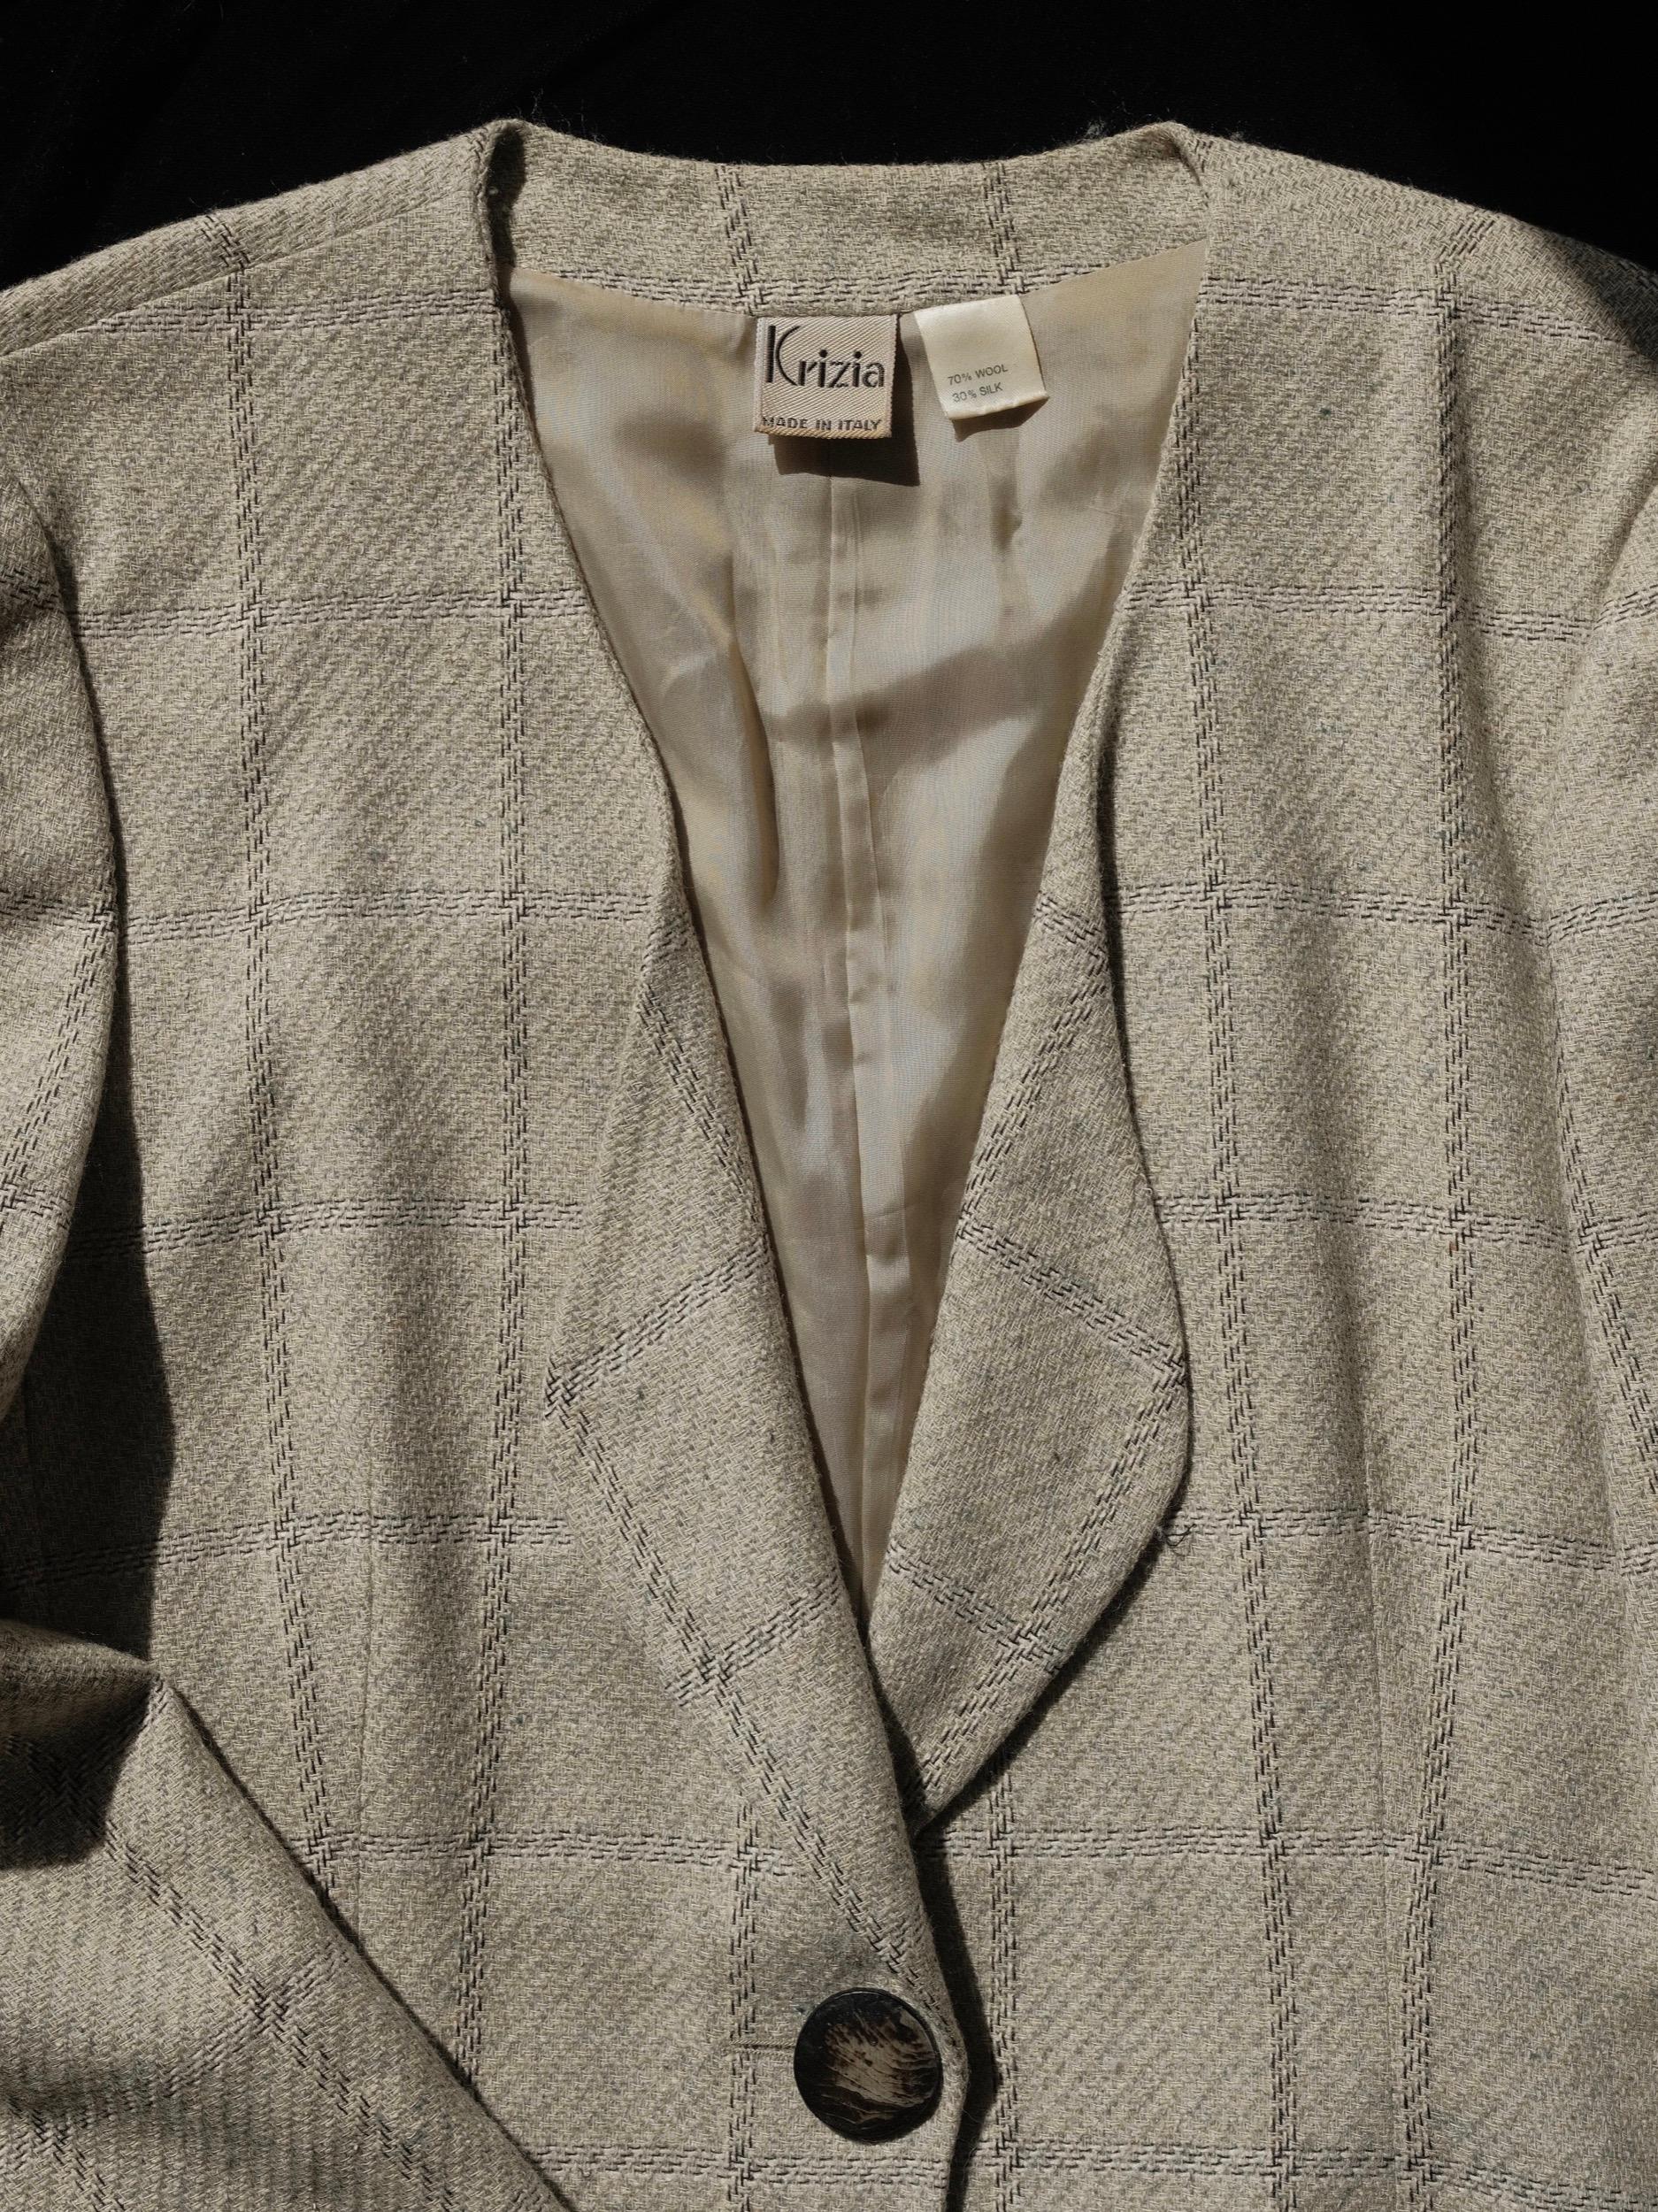 Women's Krizia Plaid Wool and Silk Jacket 1980's Sz 42 For Sale